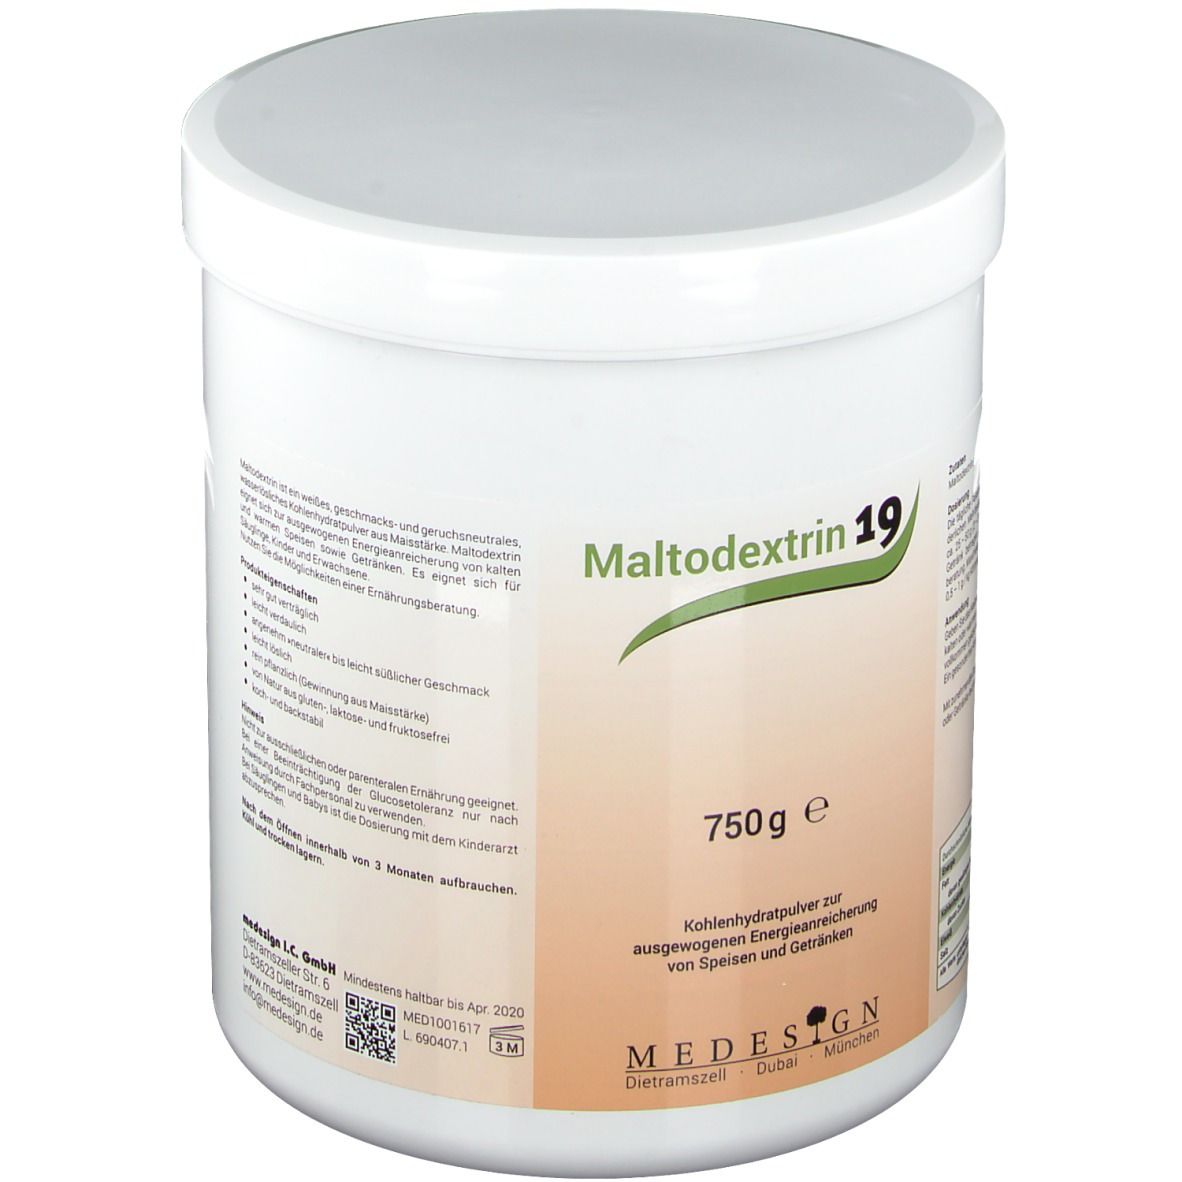 Maltodextrin 19